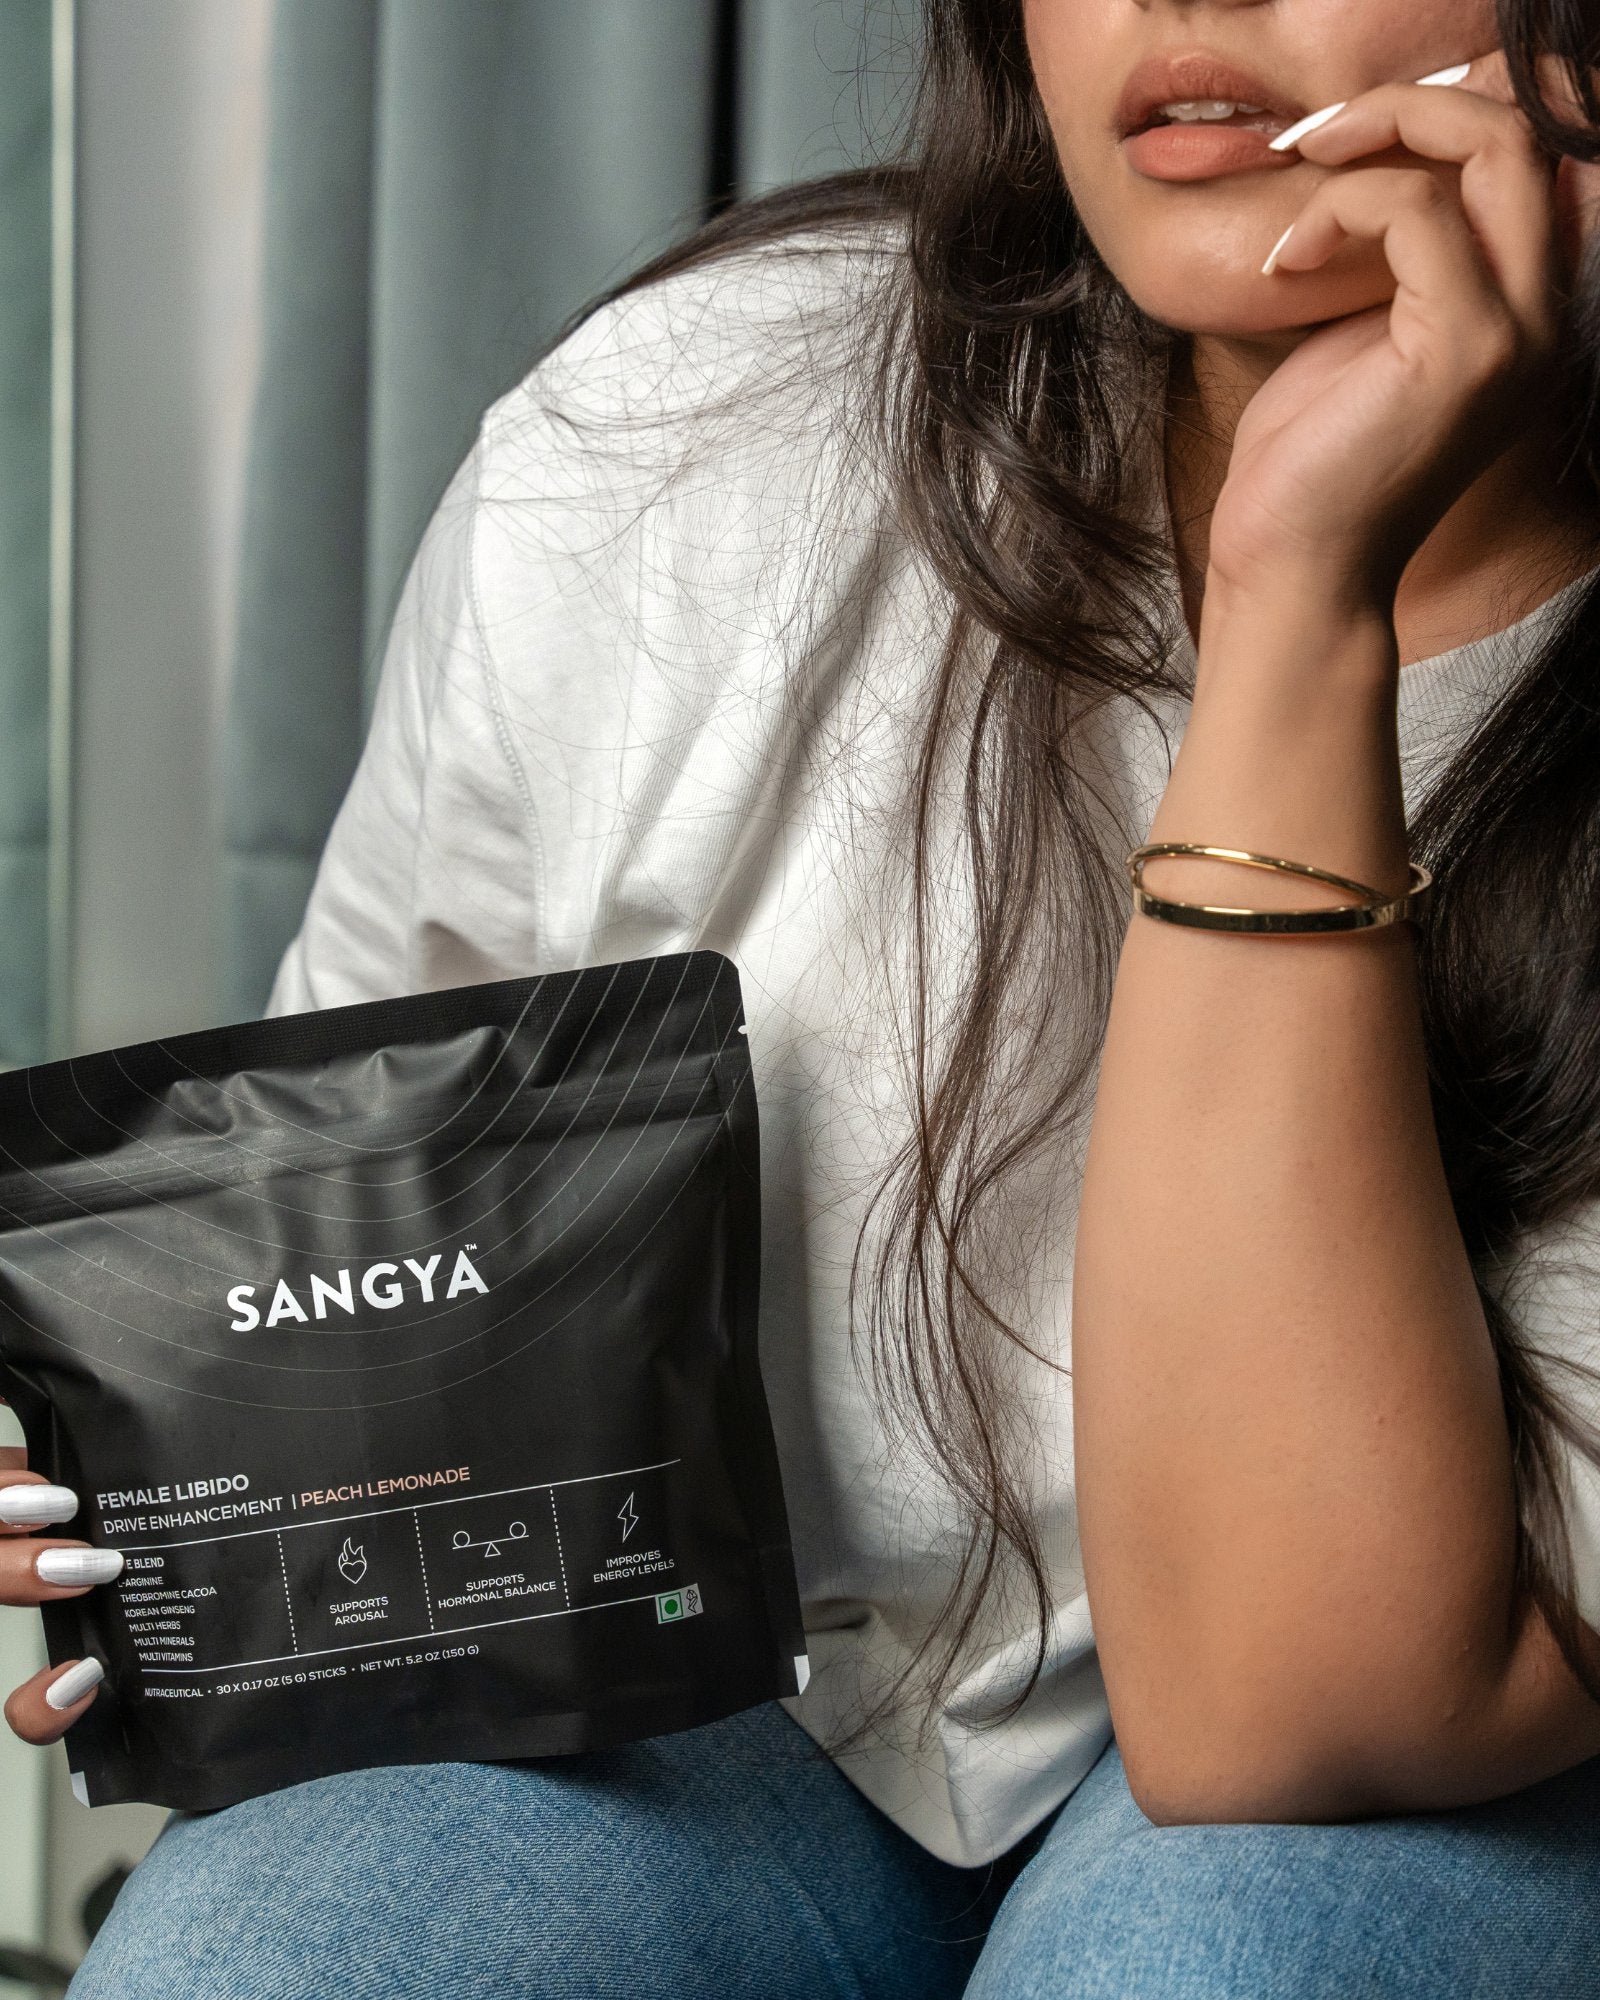 Sangya Female Libido Supplement - sangyaproject